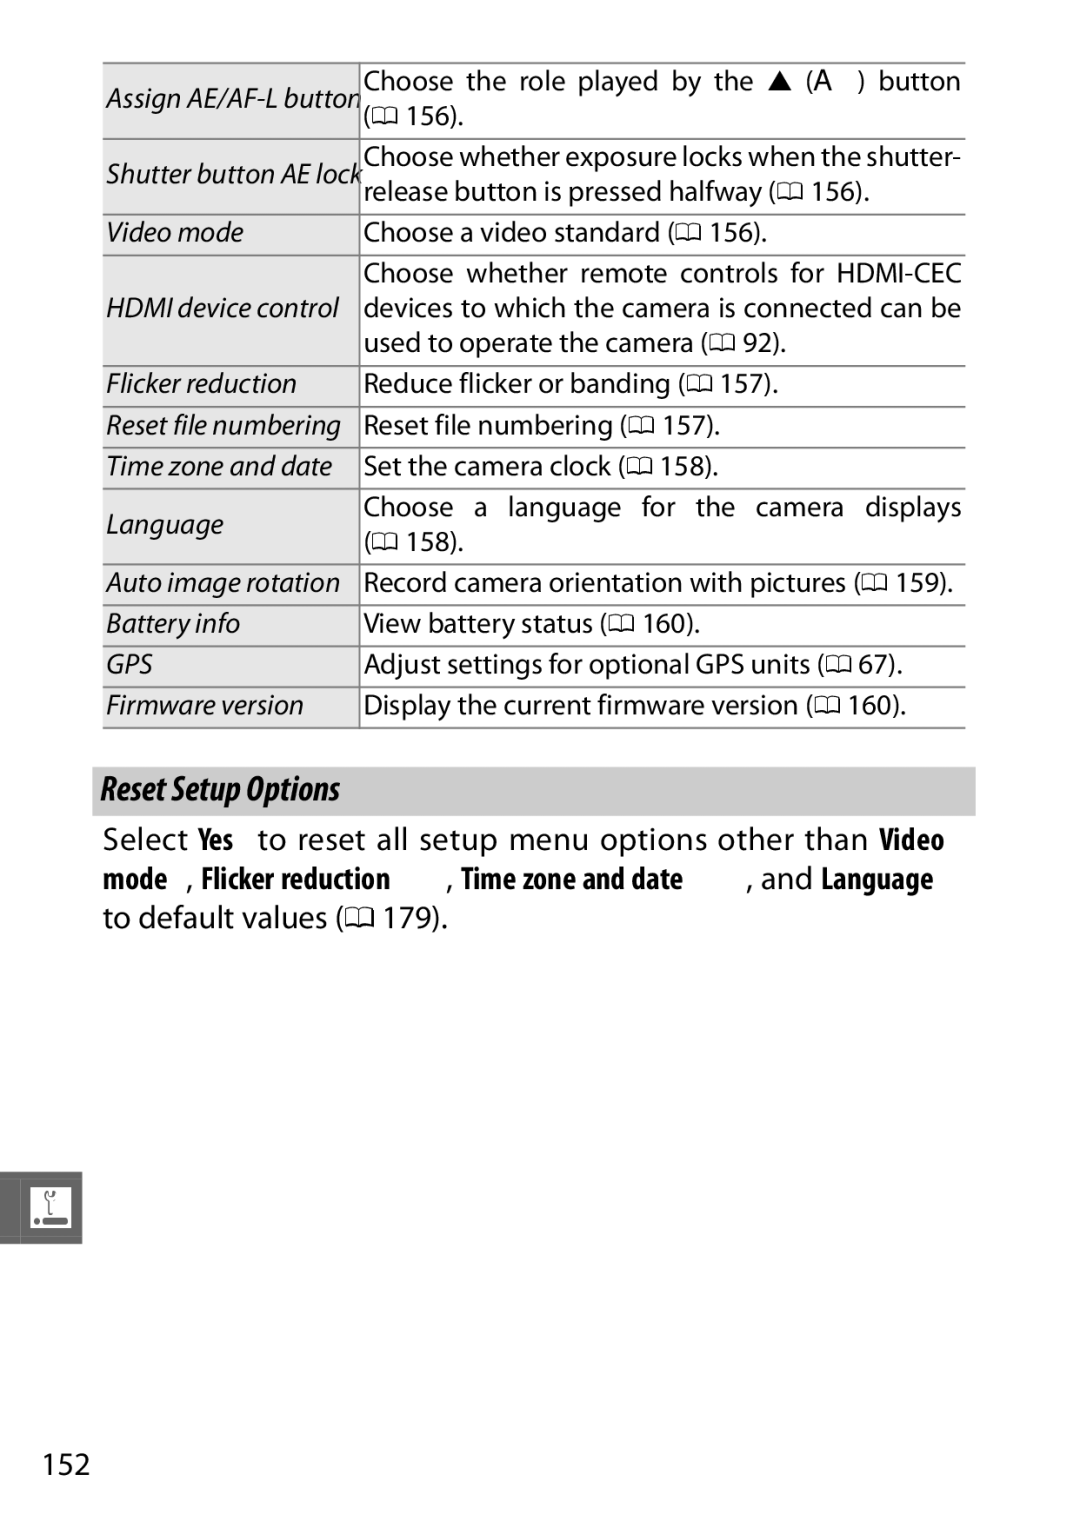 Nikon V1 manual Reset Setup Options, Video mode, Flicker reduction, Language, Battery info 